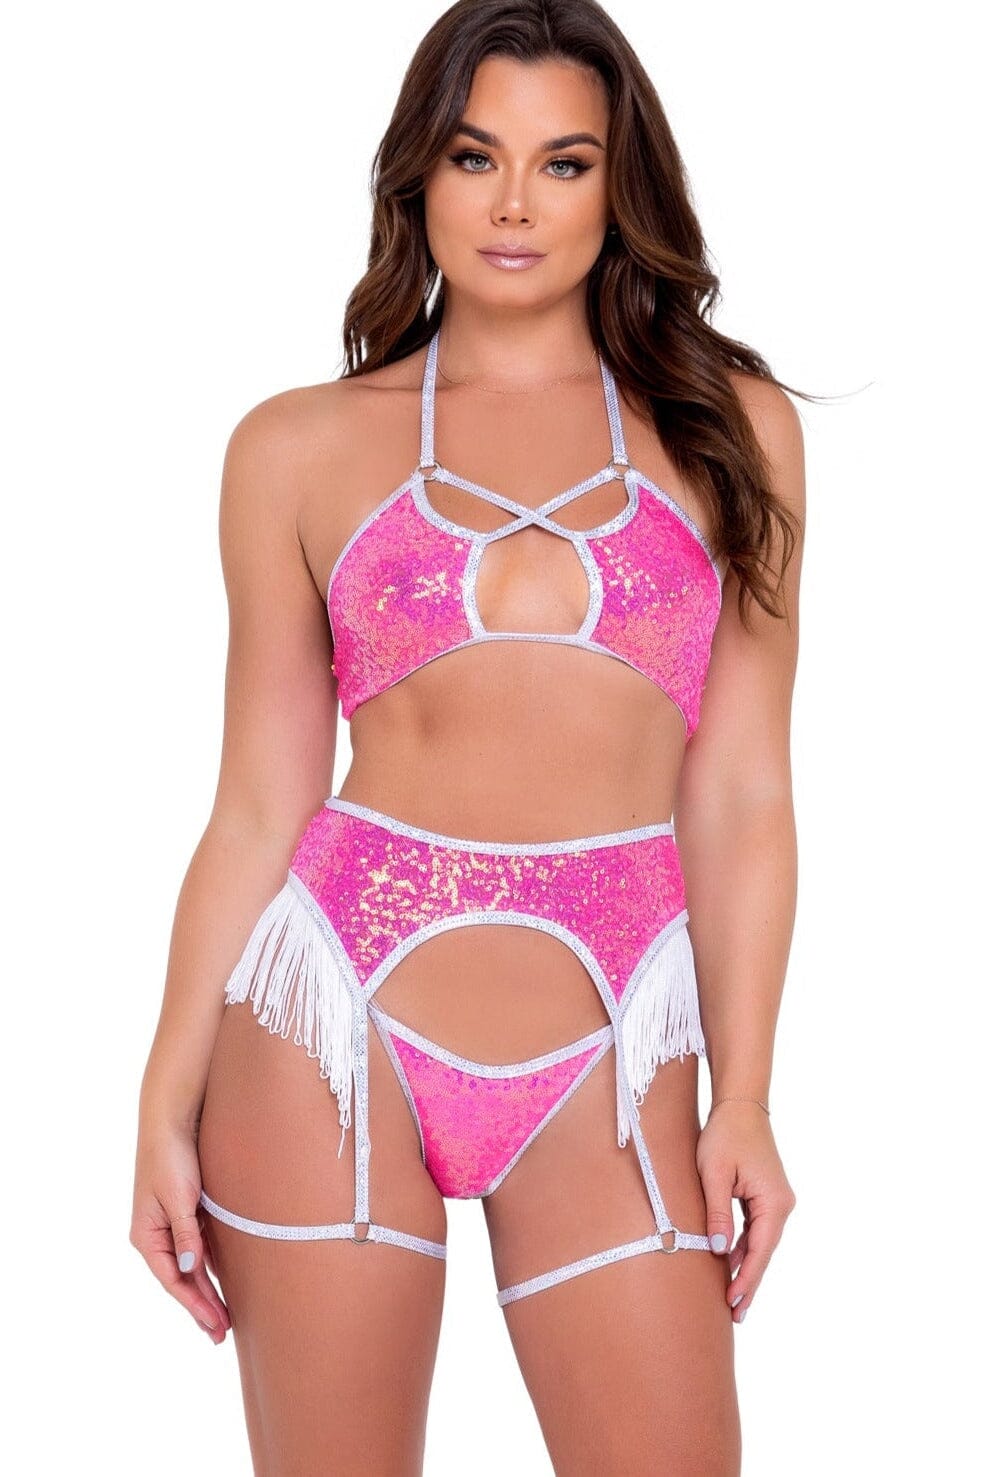 Pink Sequin Garter Belt with Fringe-Garter Belts-Roma Dancewear-Fuchsia-L-SEXYSHOES.COM